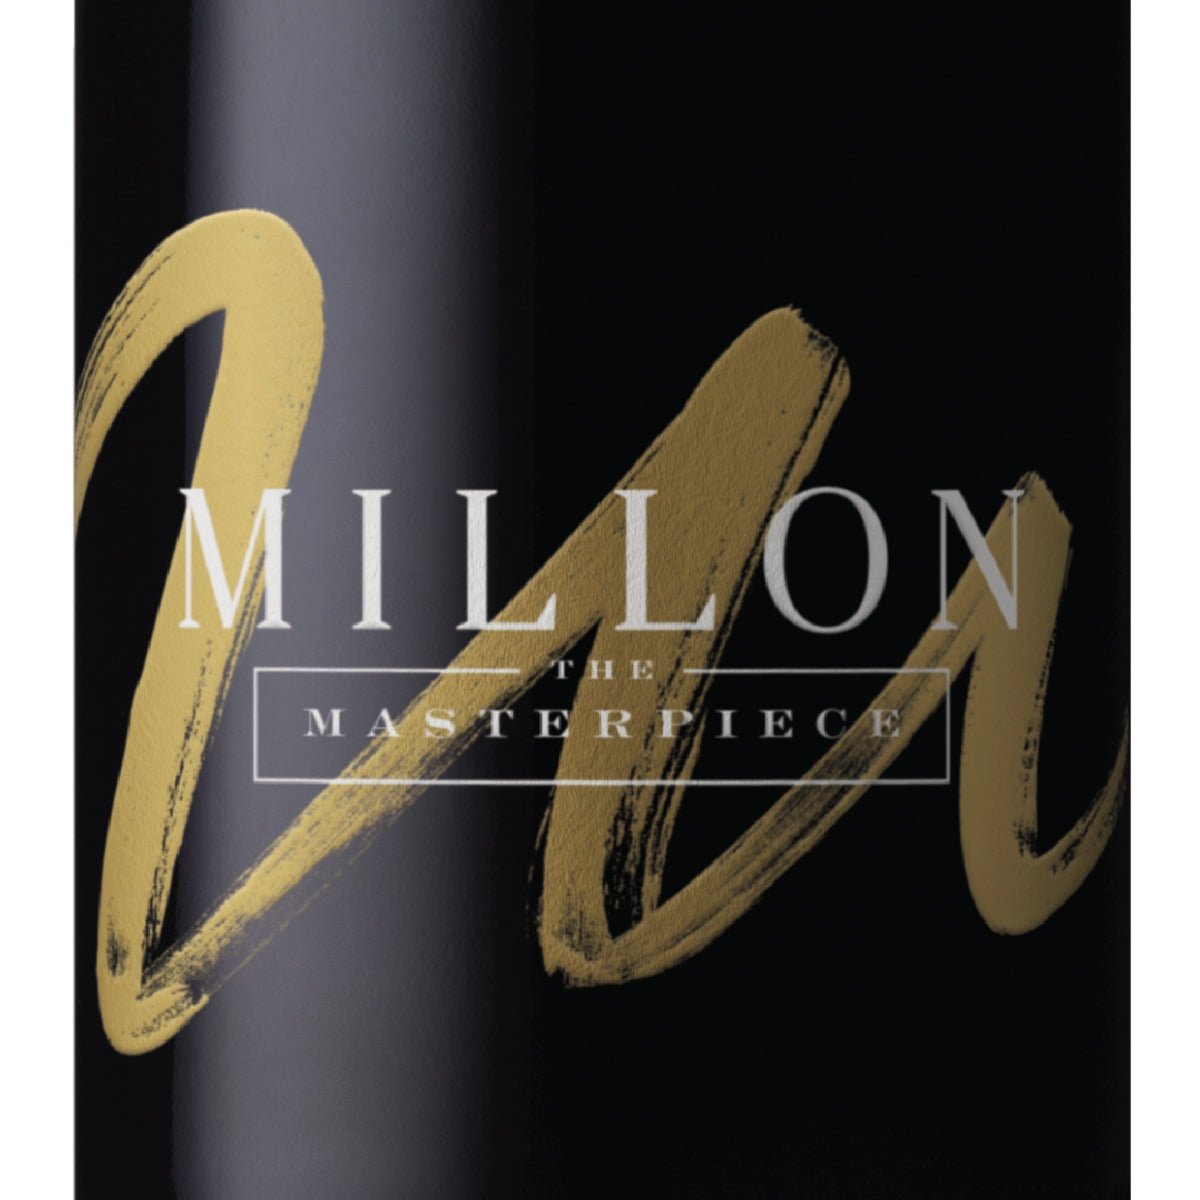 2020 Masterpiece Shiraz - Millon Wines